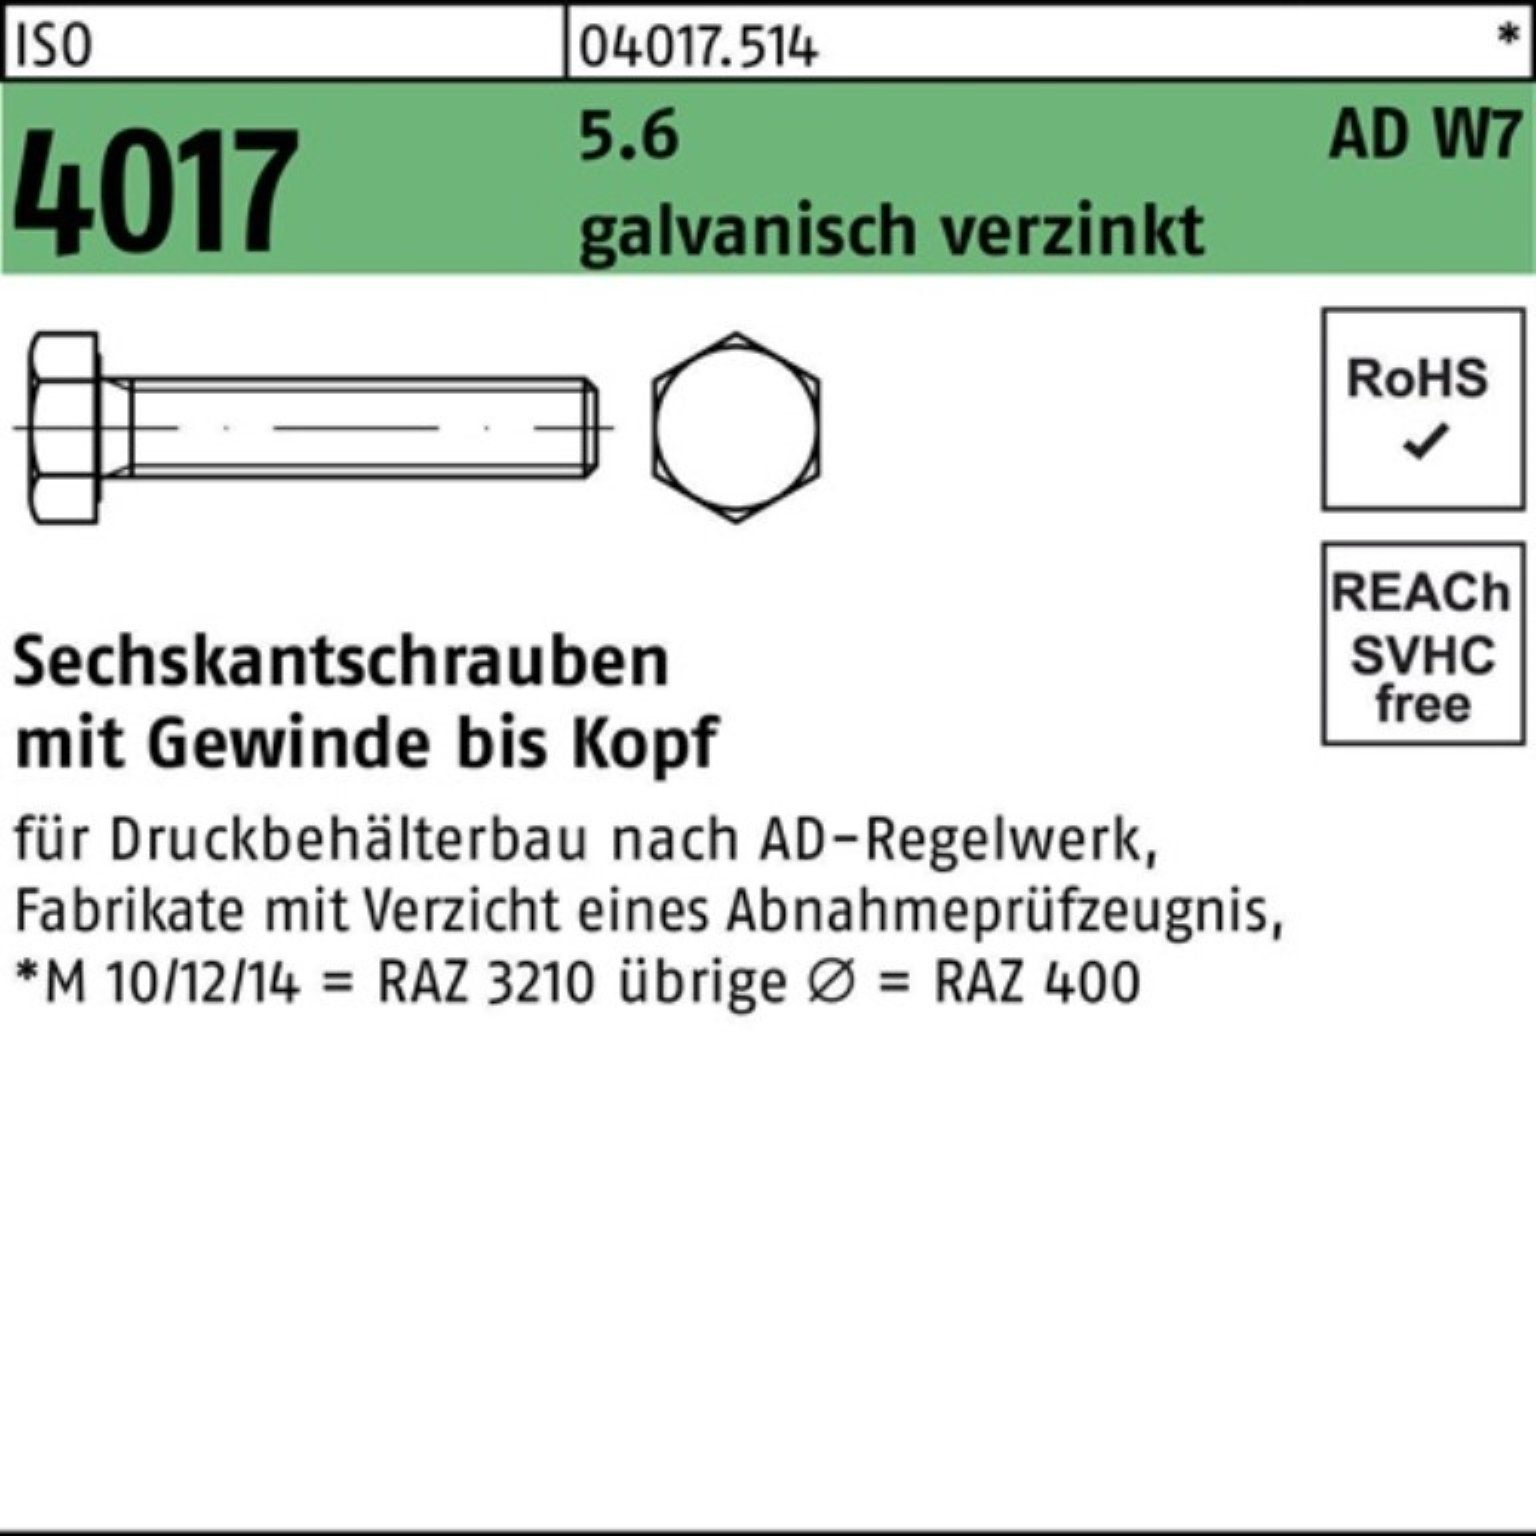 Bufab Sechskantschraube 100er W7 Sechskantschraube galv.verz. Pack M24x ISO AD VG 5.6 4017 80